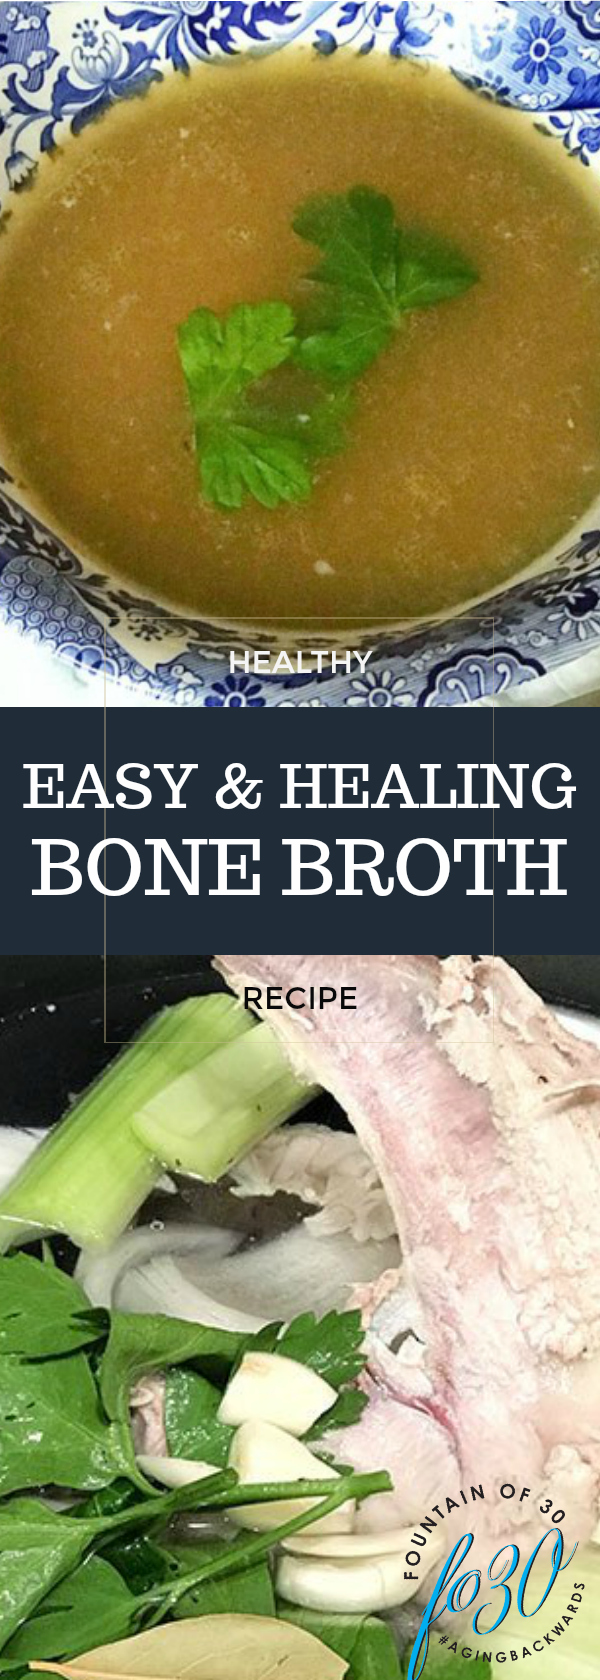 Easy to Make Turkey or Chicken Bone Broth Recipe